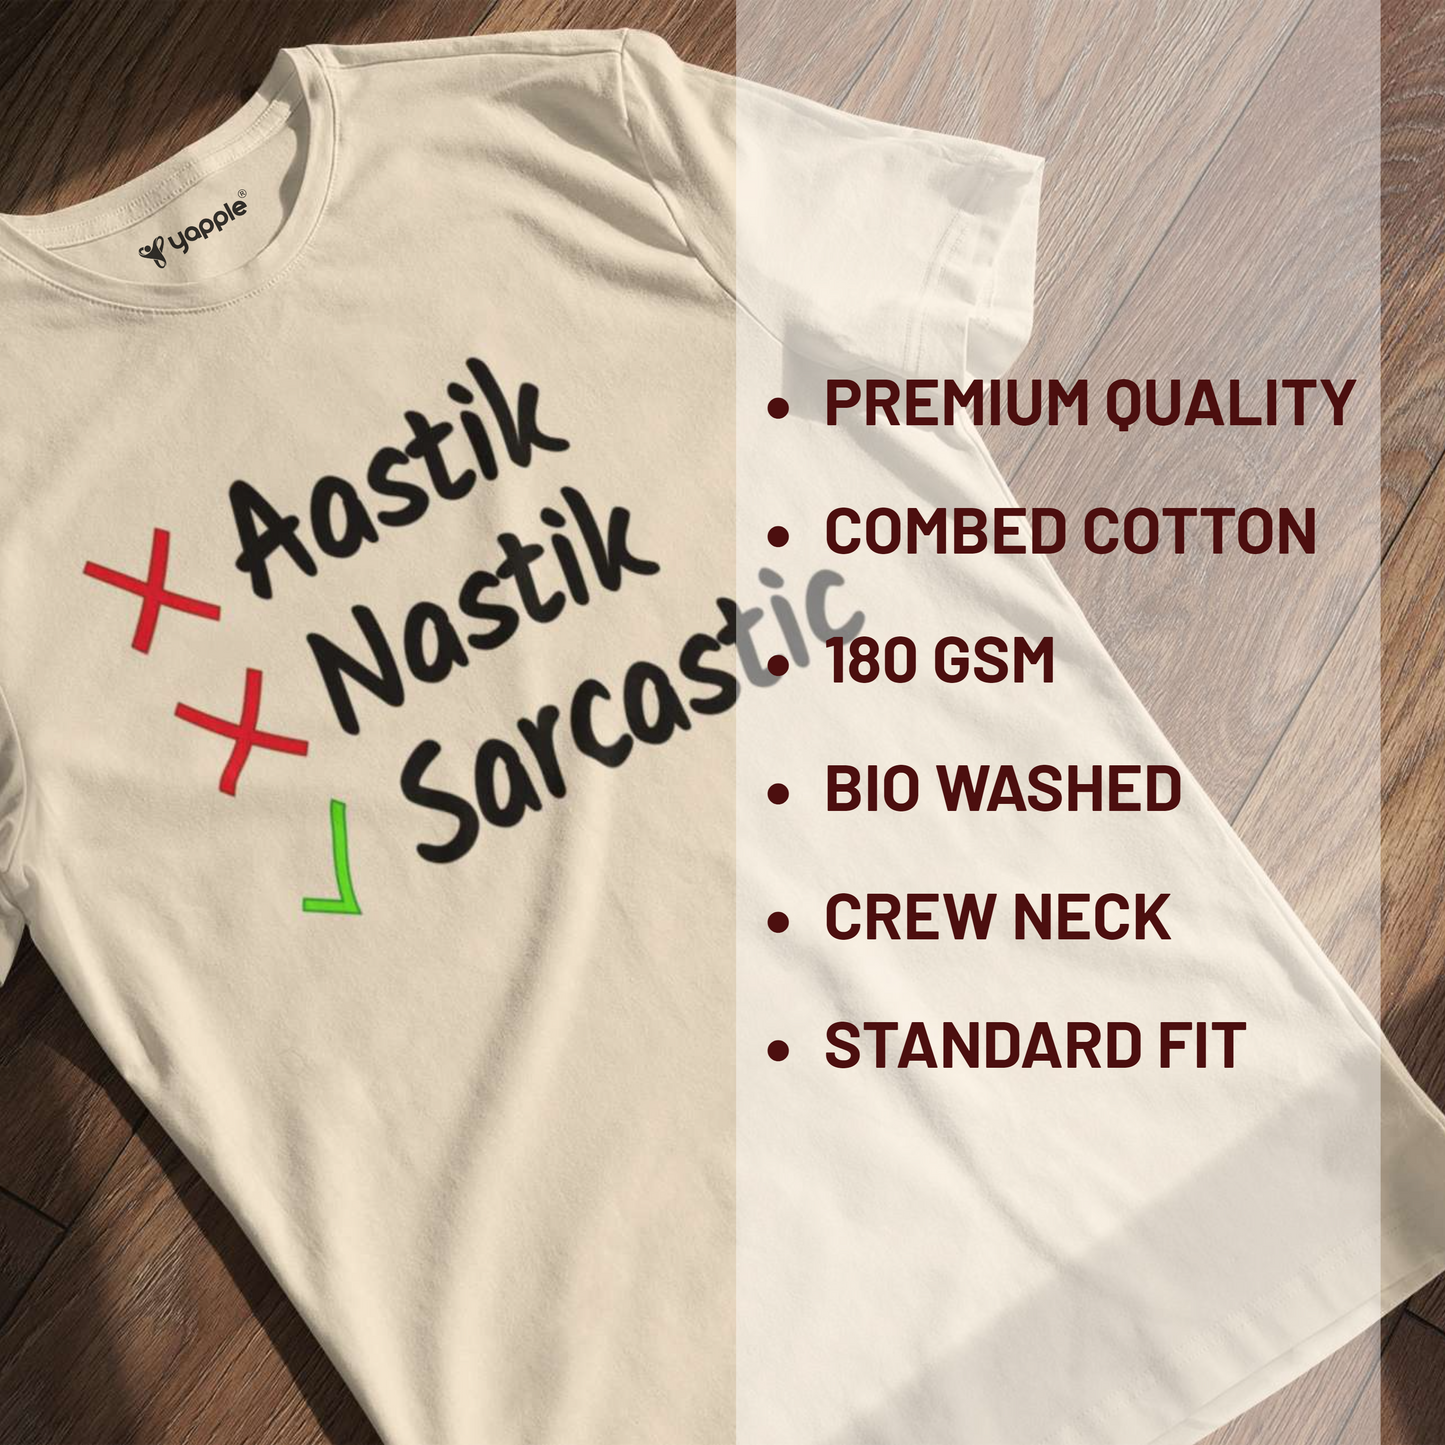 Aastik Nastik Sarcastic Round Neck Cotton T-Shirt - Beige